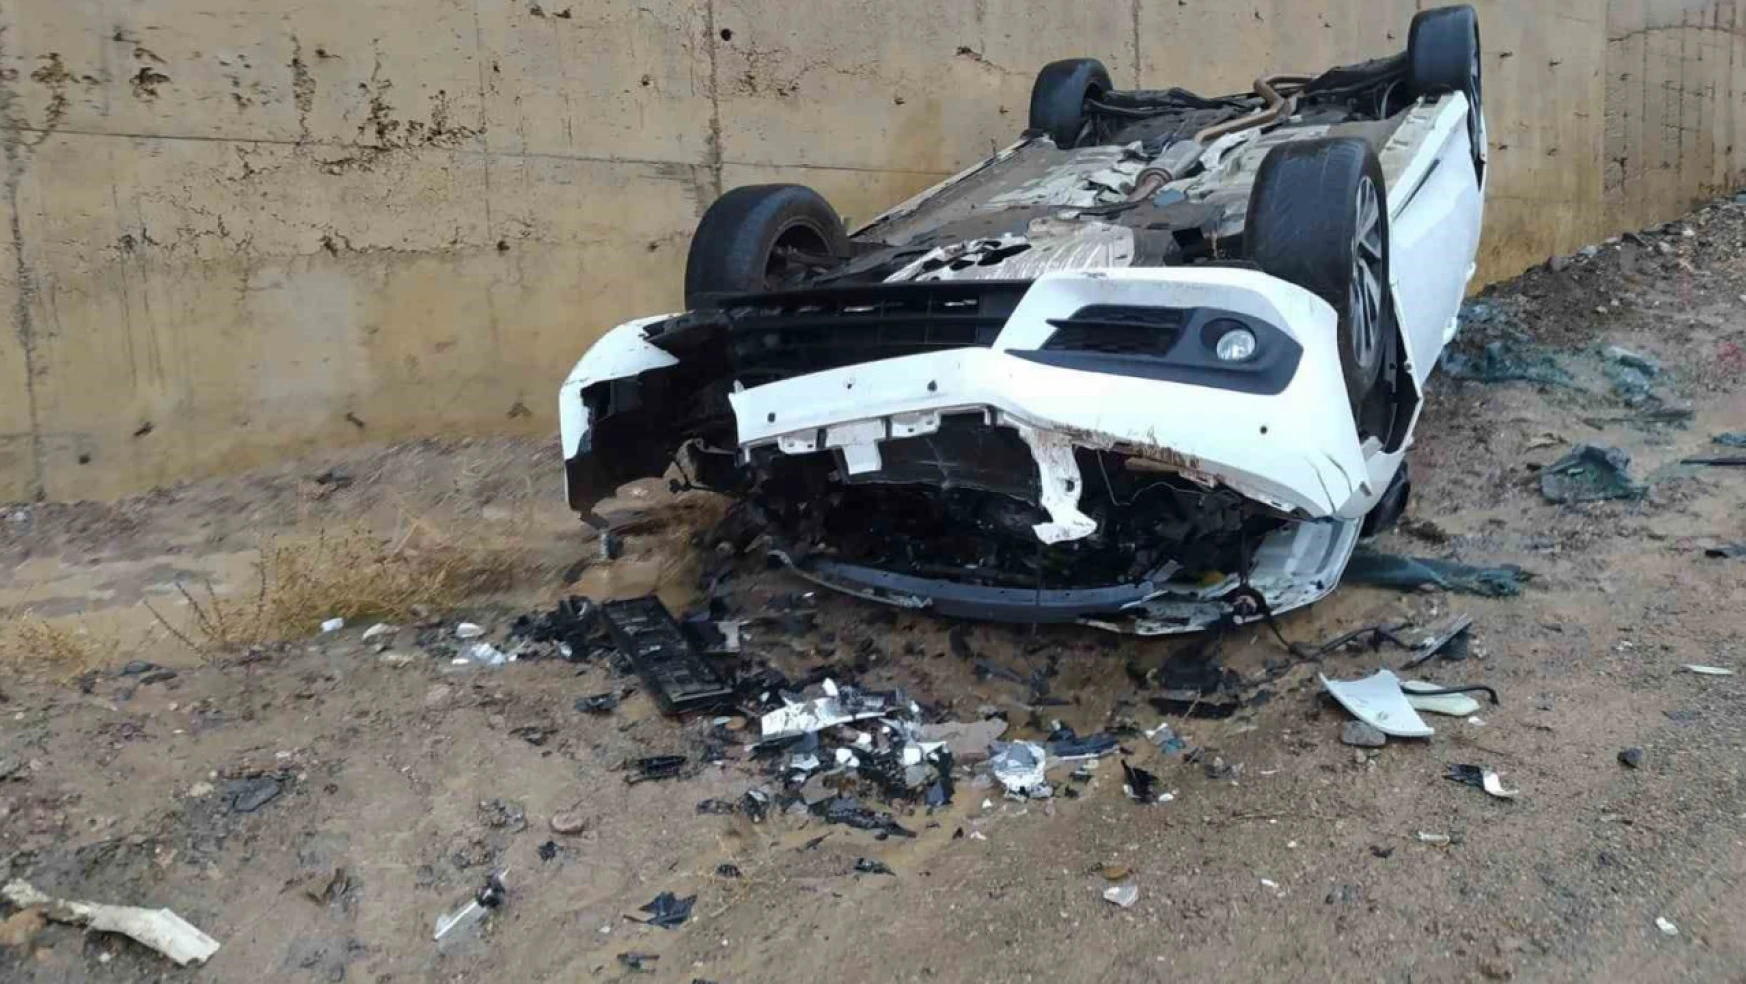 Bingöl'de otomobil şarampole yuvarlandı: 2 yaralı